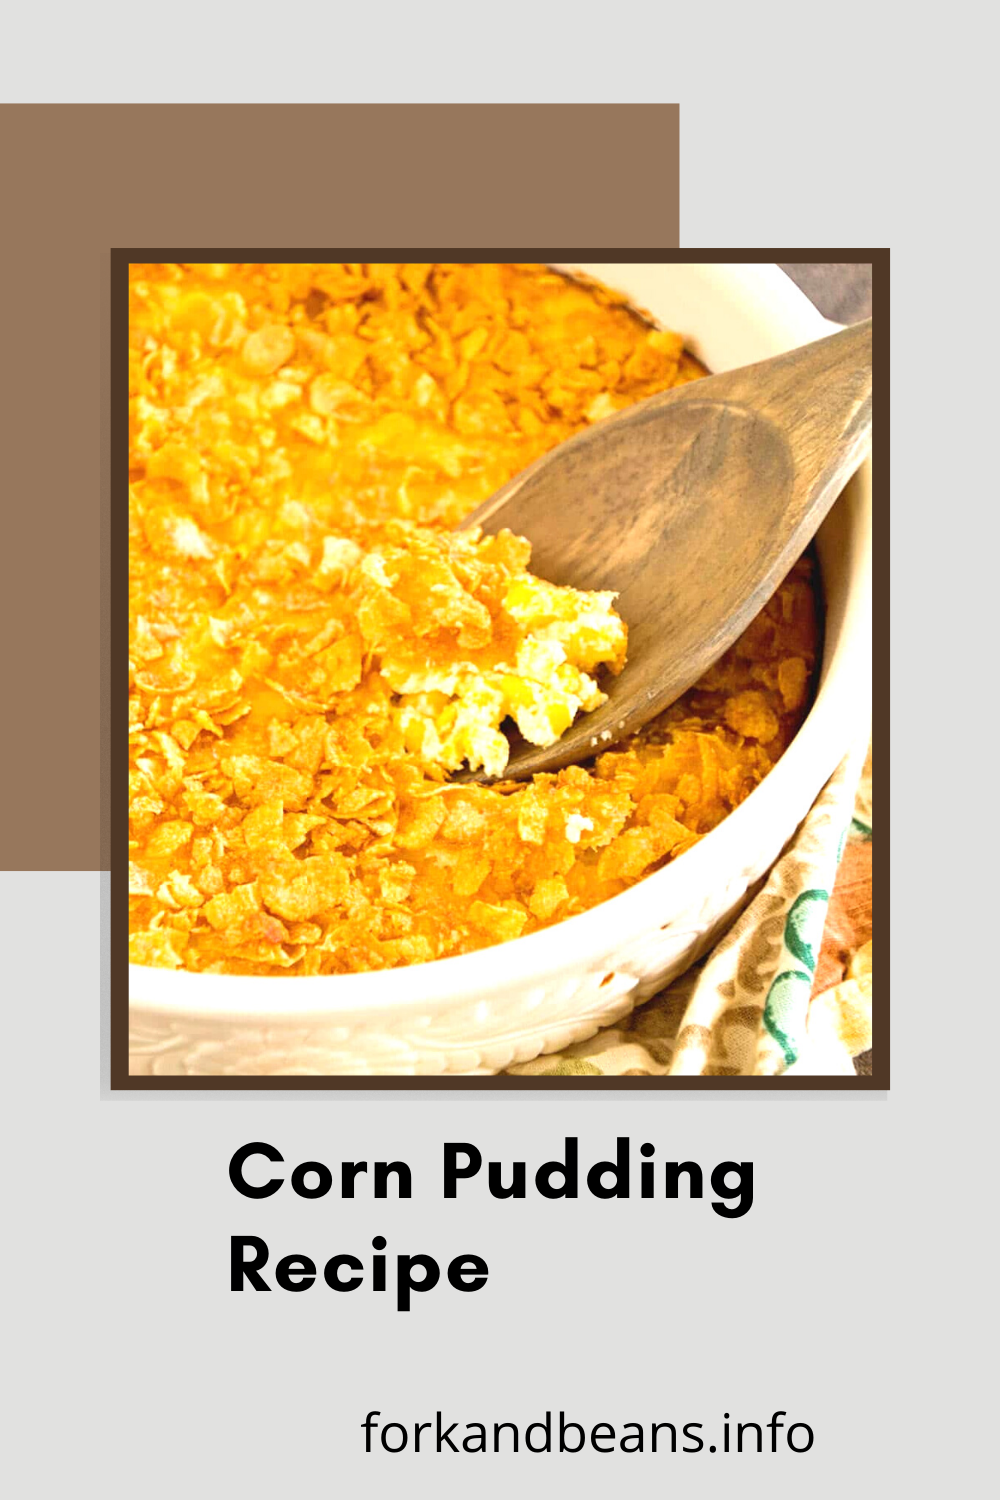 How to Make a Corn Pudding Casserole